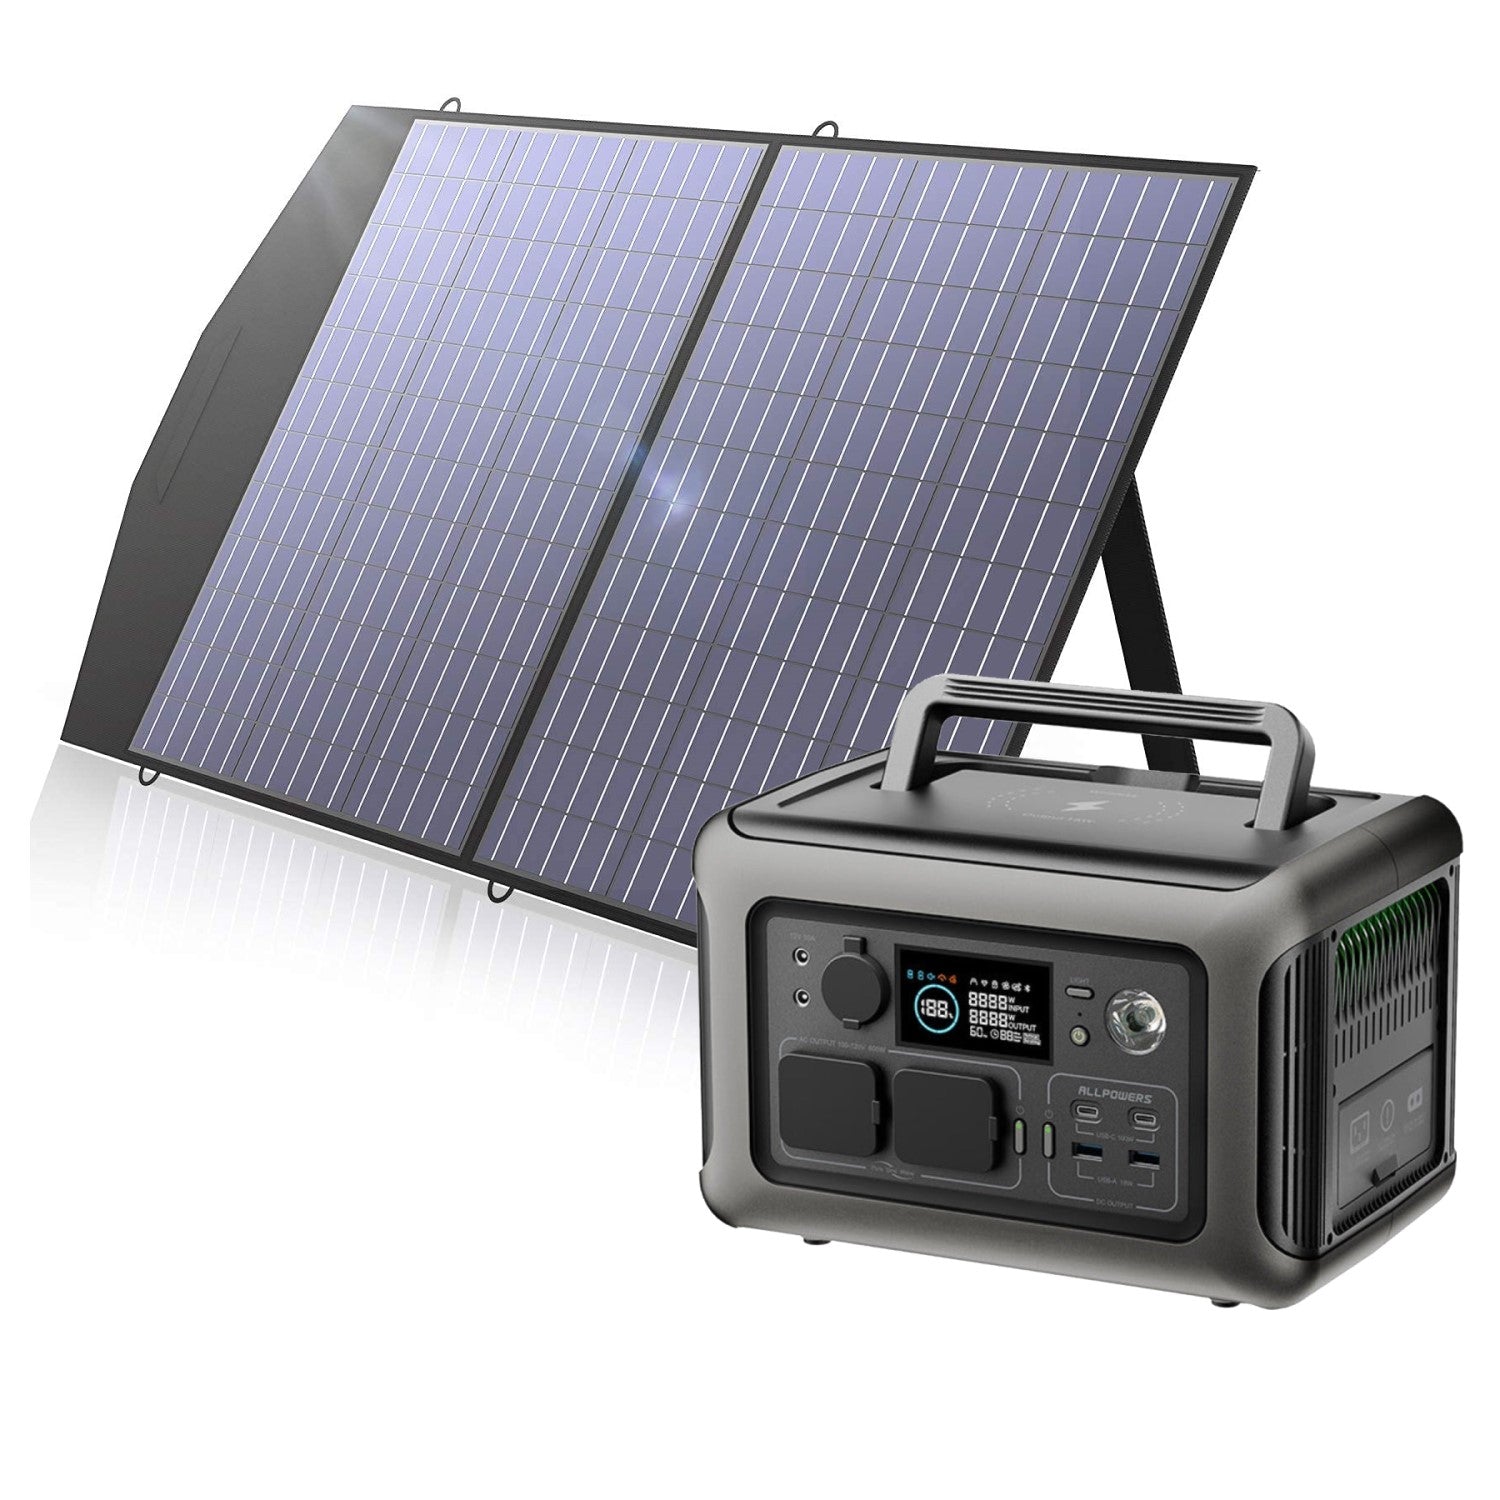 Portable Power Station, Solar Panels & Solar Generators Kits